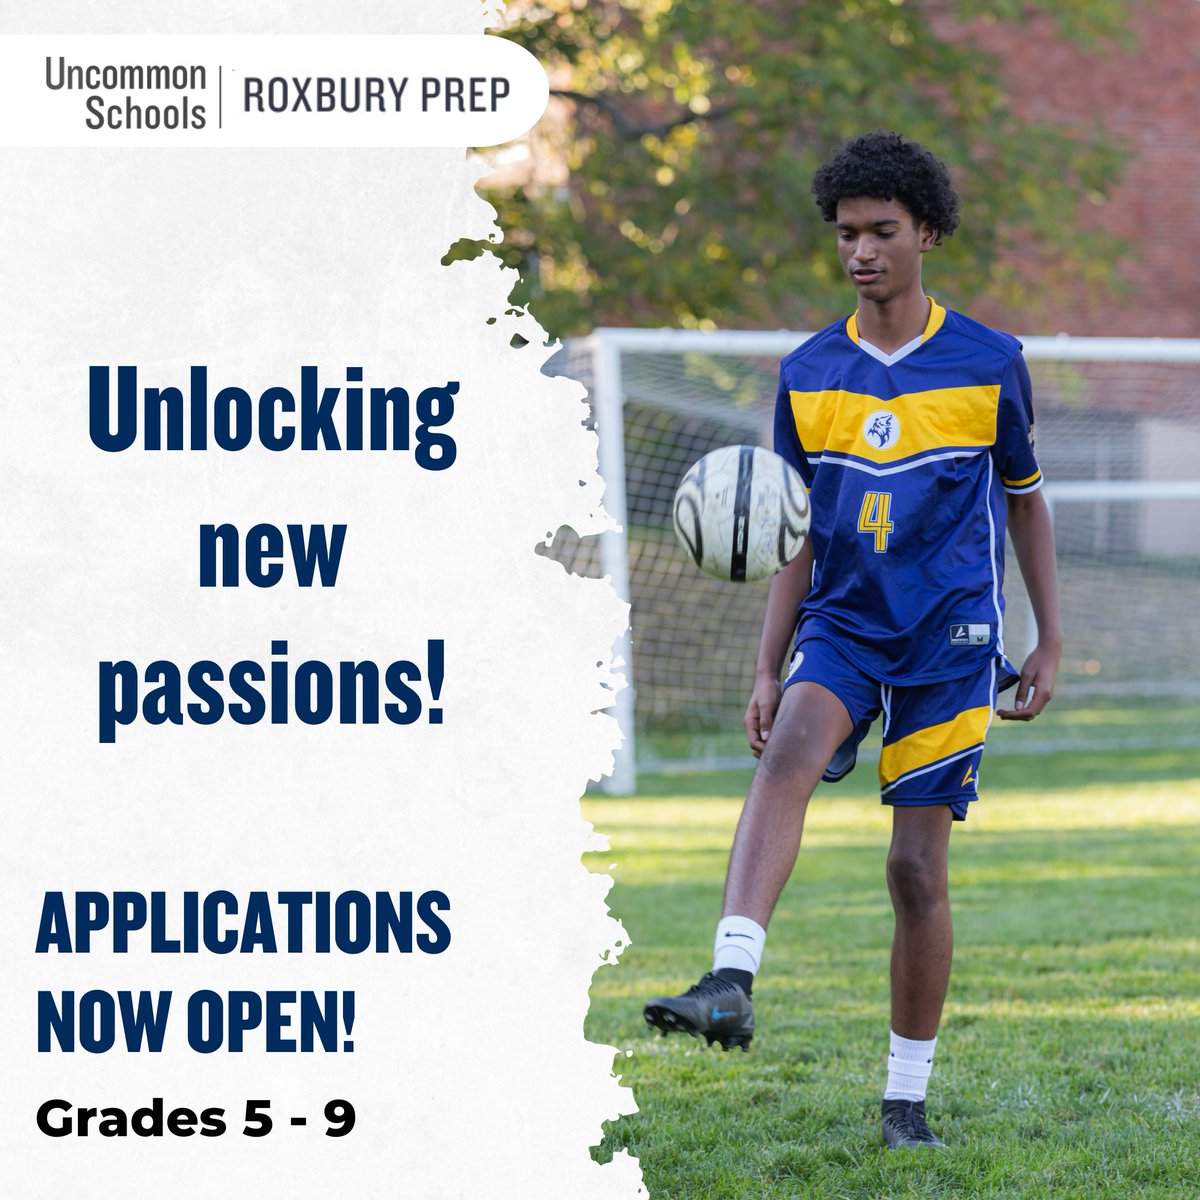 Extracurriculars for extra confidence. Enroll at Roxbury Prep now: roxburyprep.org/enroll!